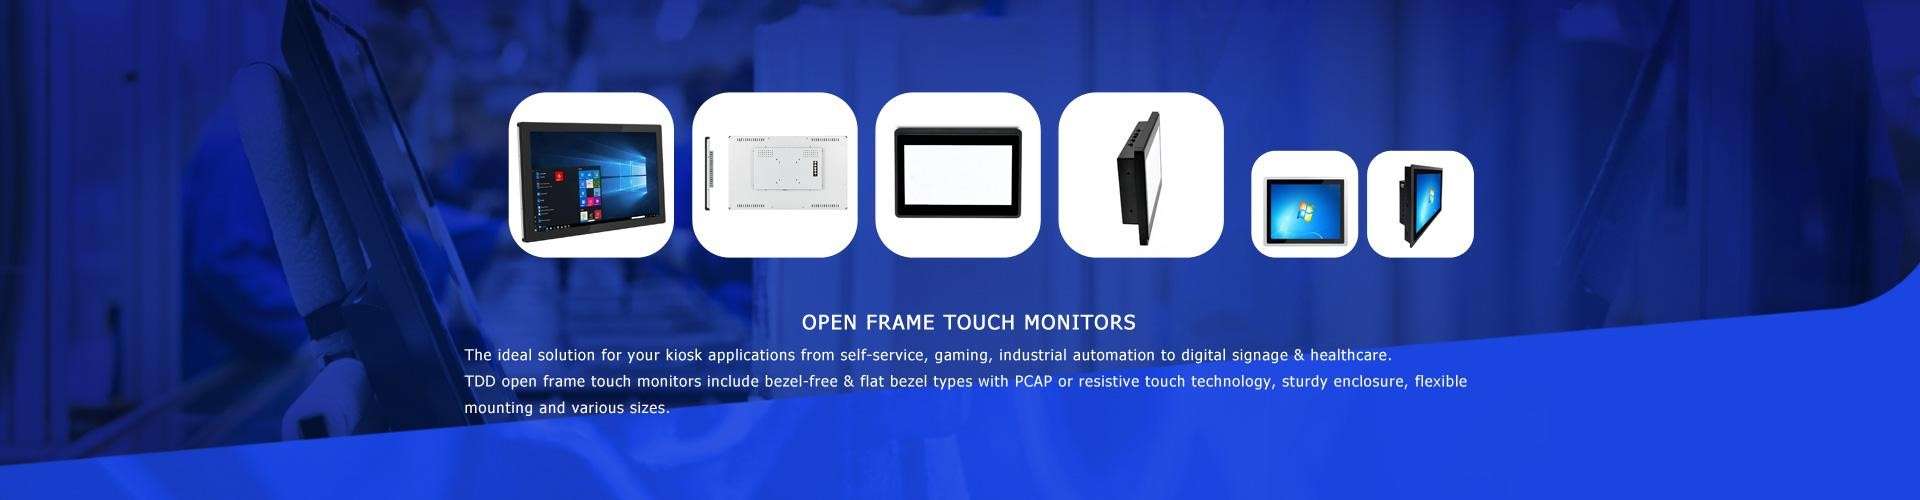 touchscreen monitor technologies